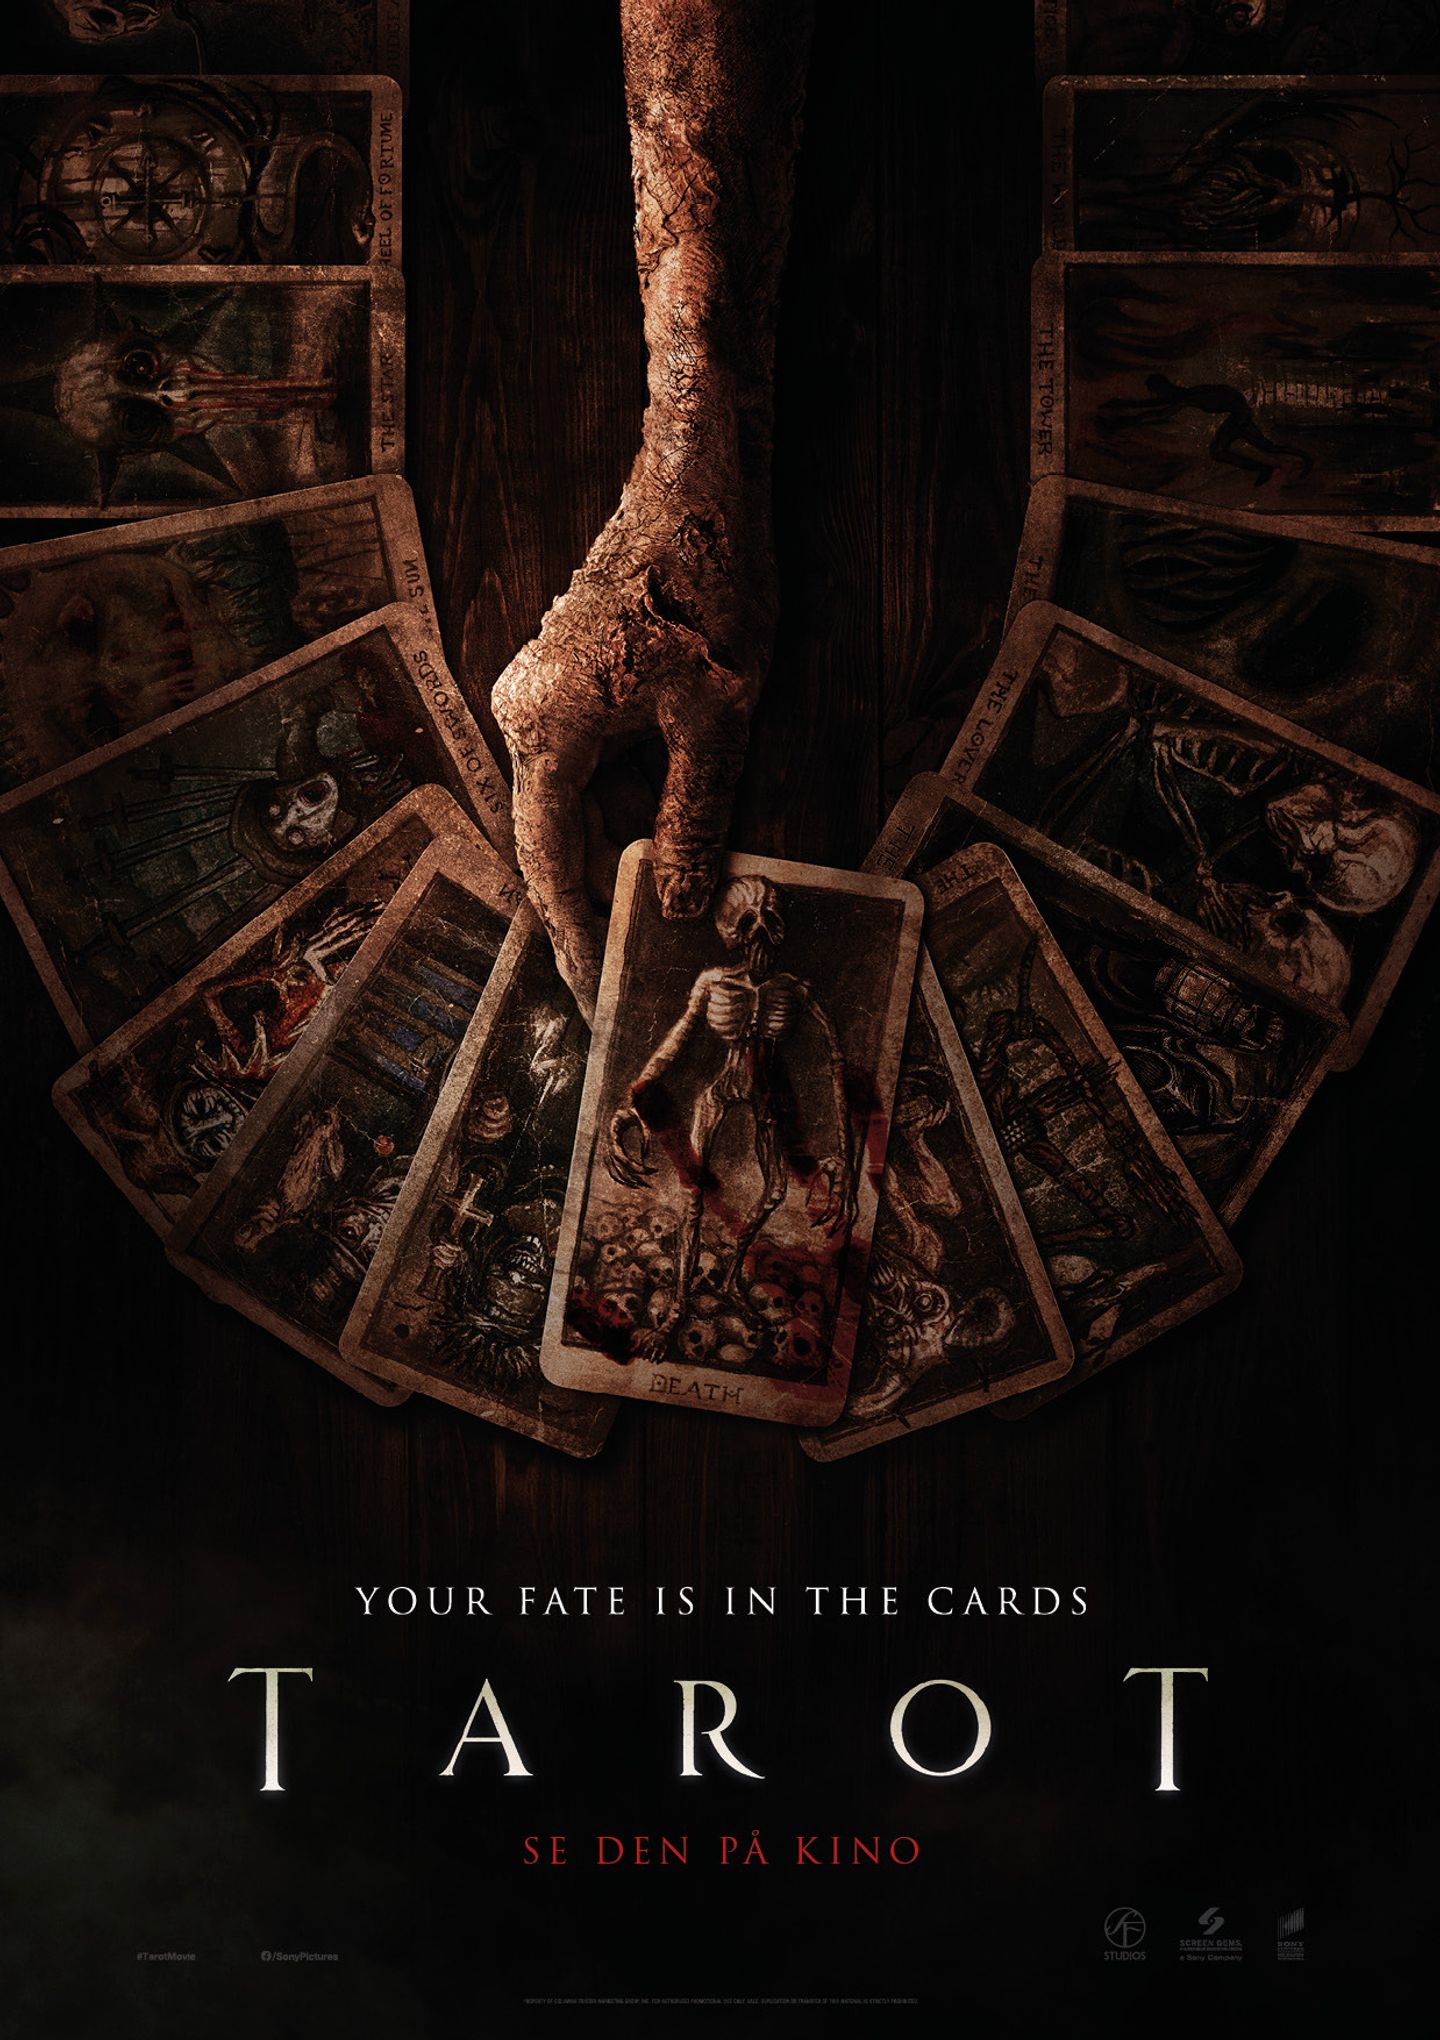 Plakat for 'Tarot'